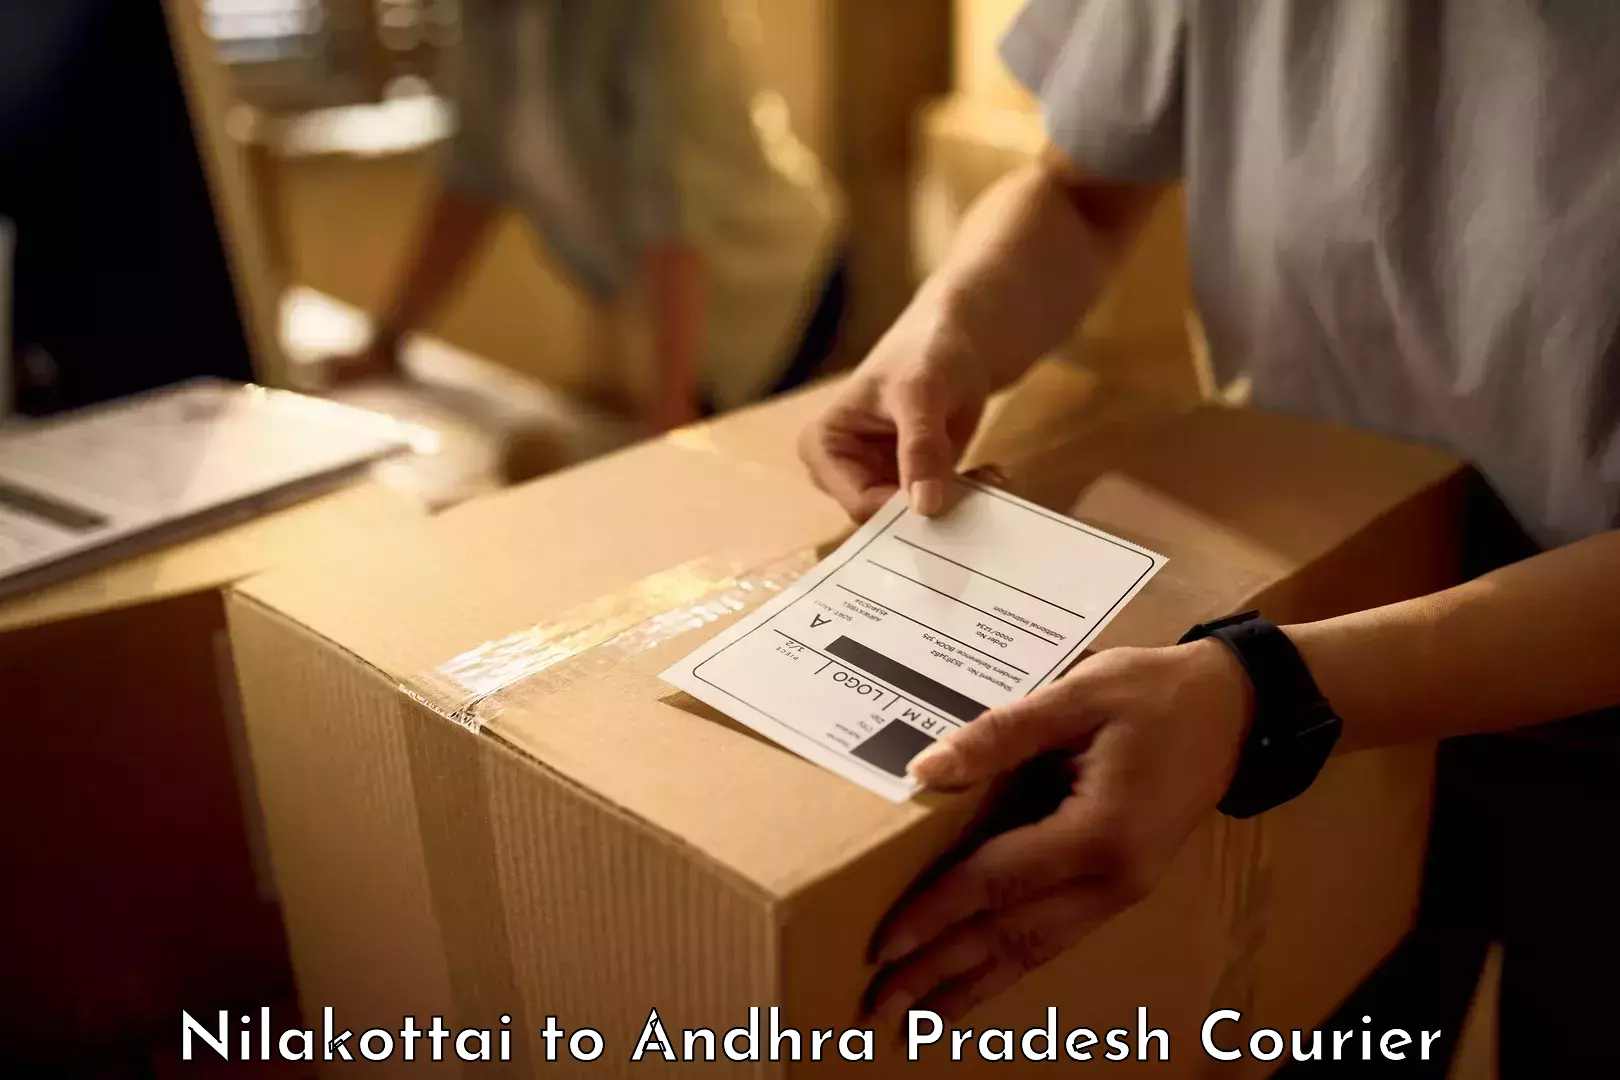 Luggage delivery network Nilakottai to Visakhapatnam